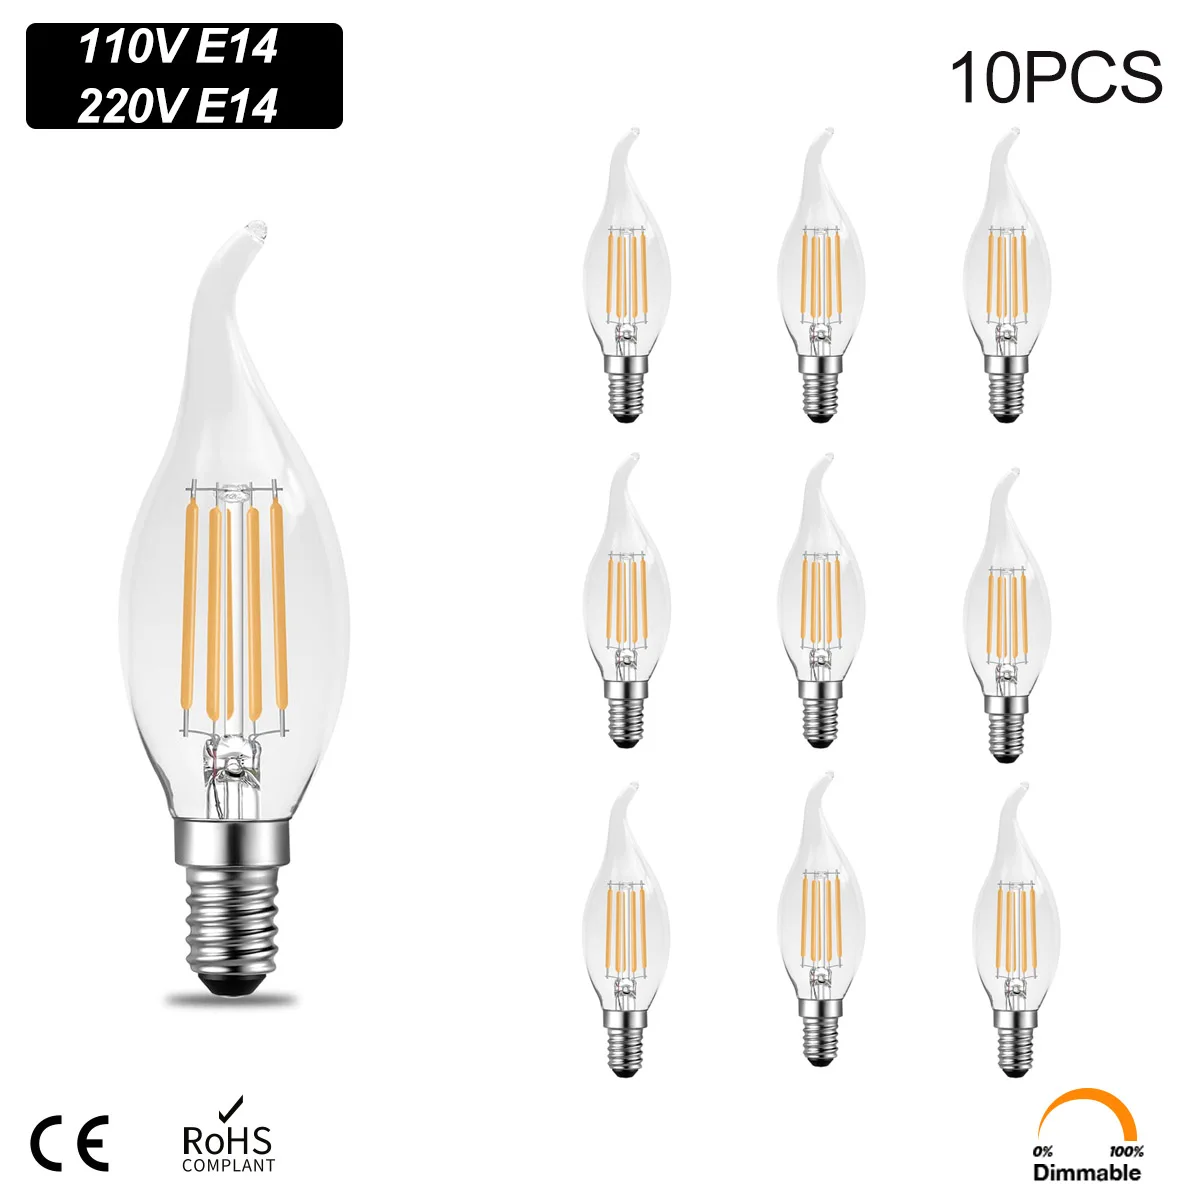 

E14 Base 110V 220V Candle Led Bulbs Lampada 4W 6W 2700K Dimmable C35 Edison Light Bulb 60W Incandescent Equivalent For Chandelie